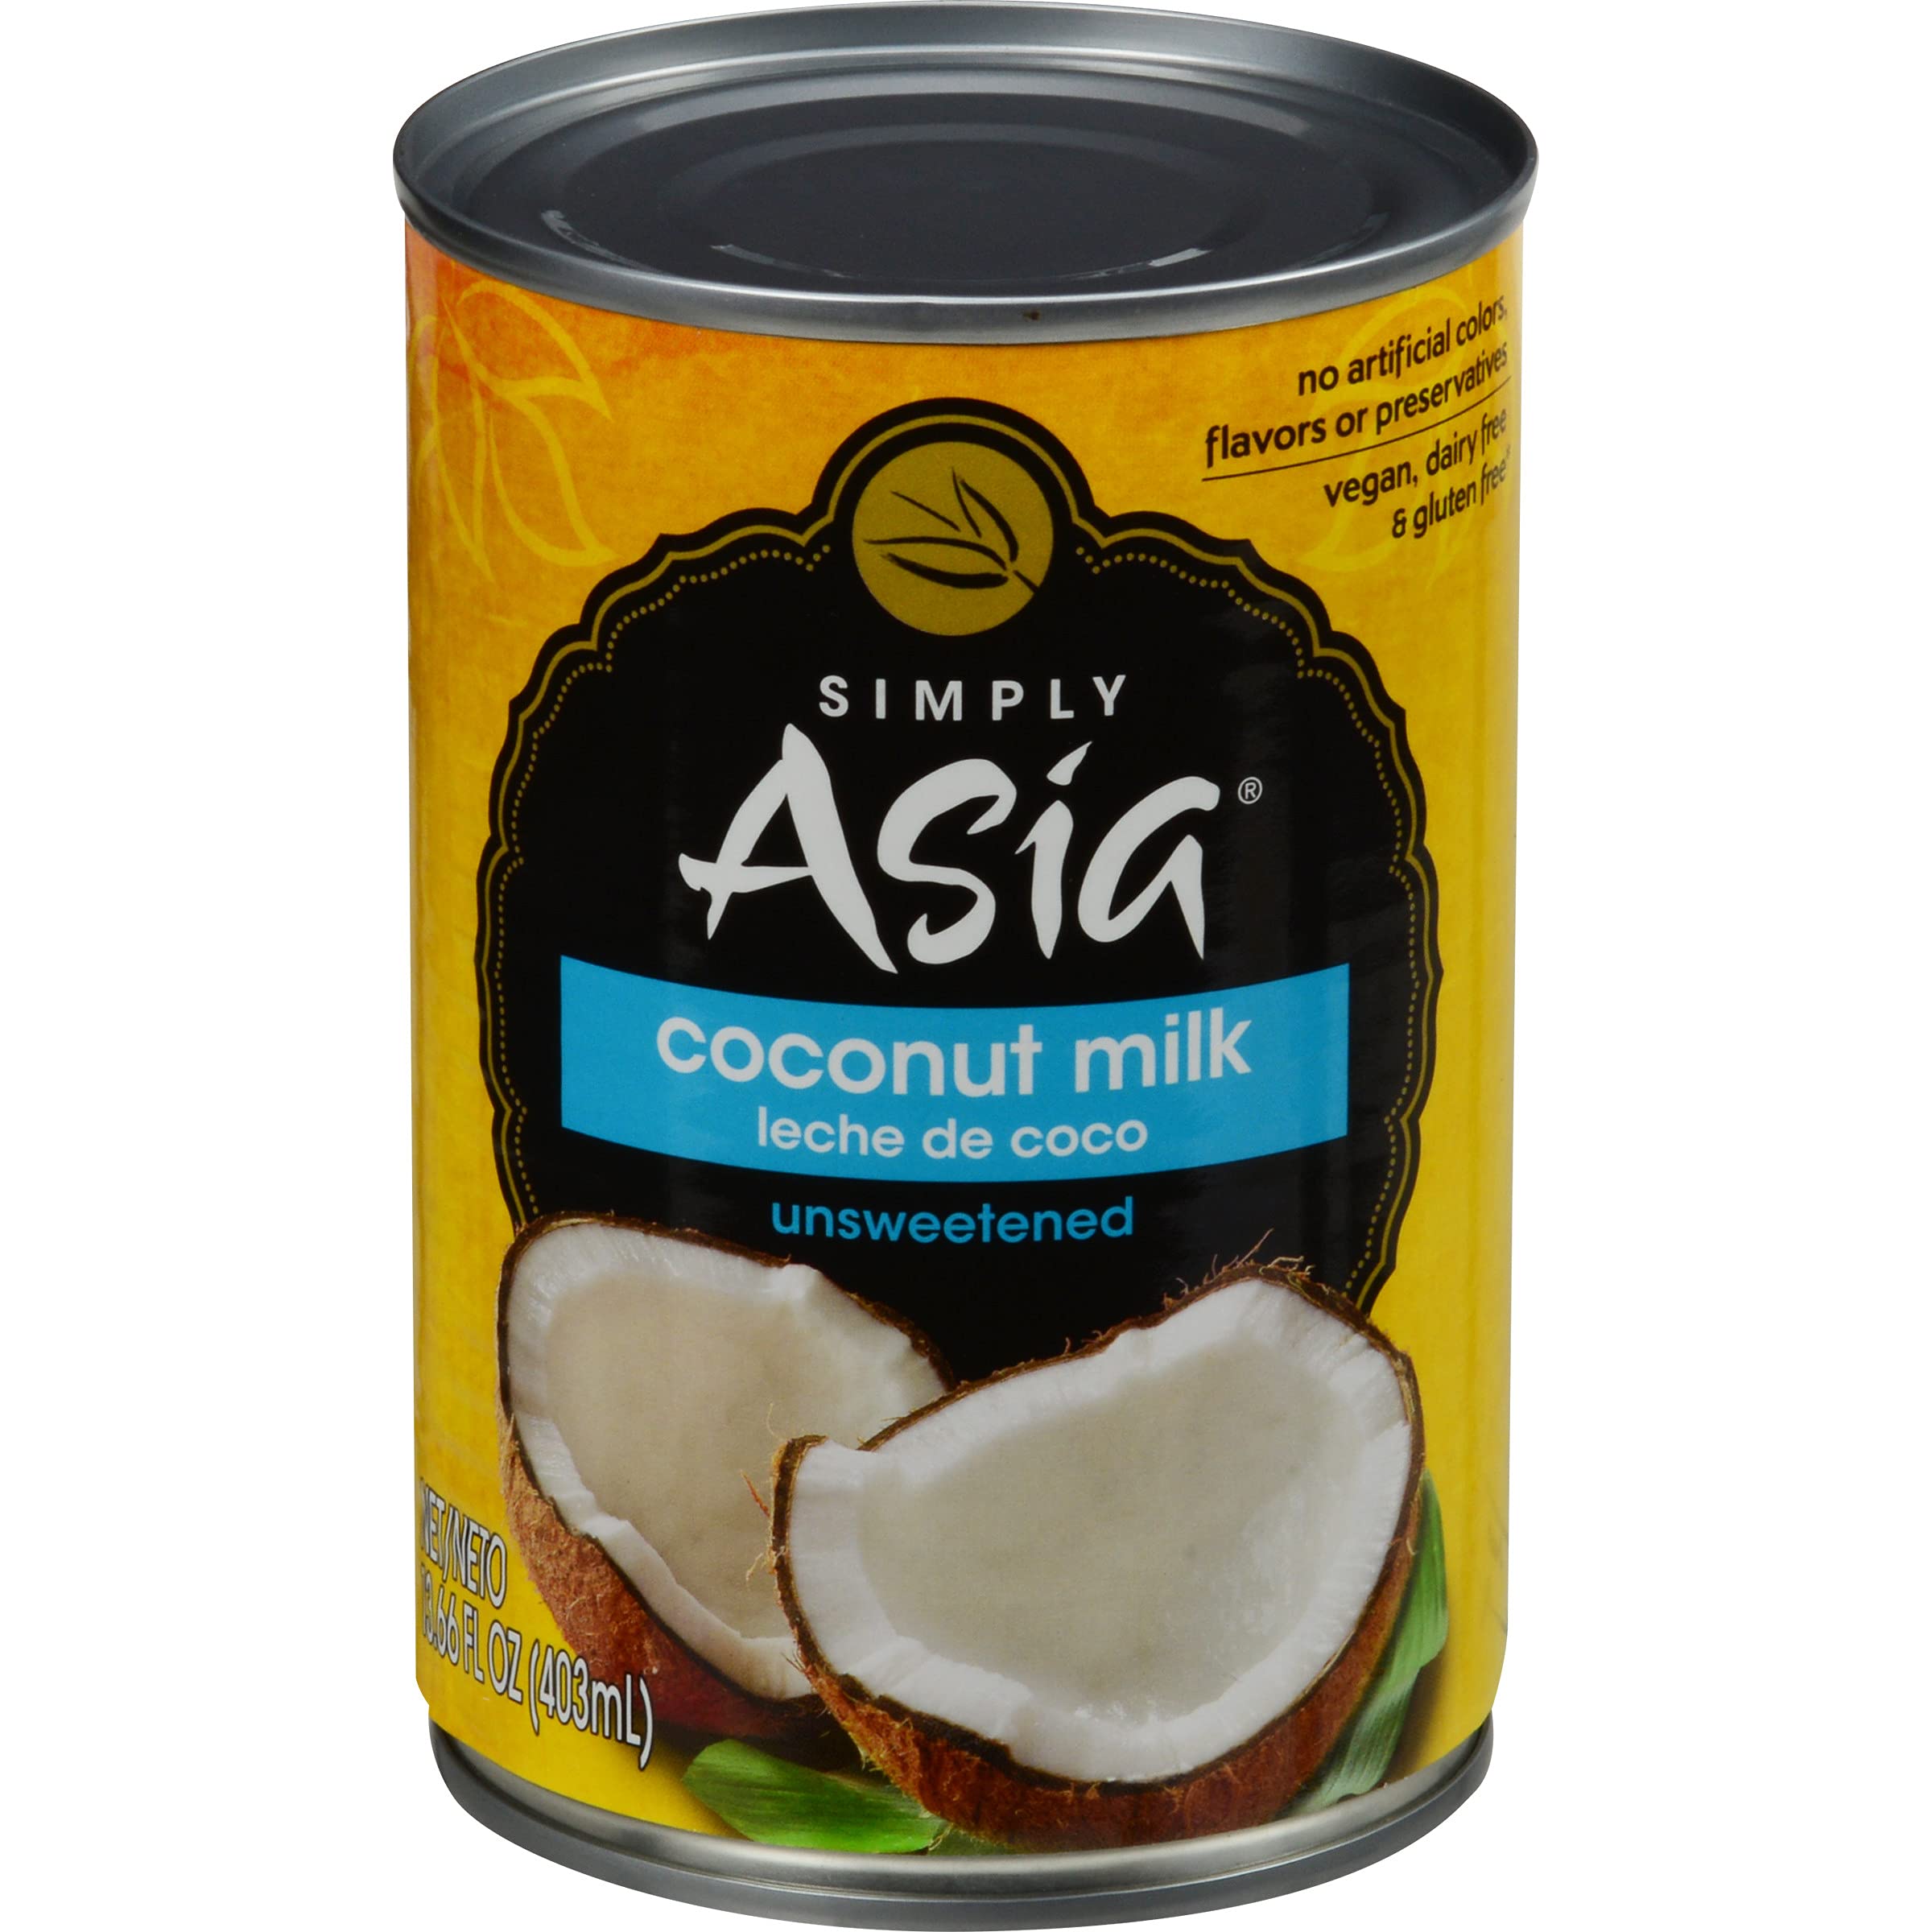 Simply Asia Unsweetened Coconut Milk, 13.66 fl oz - $1.43